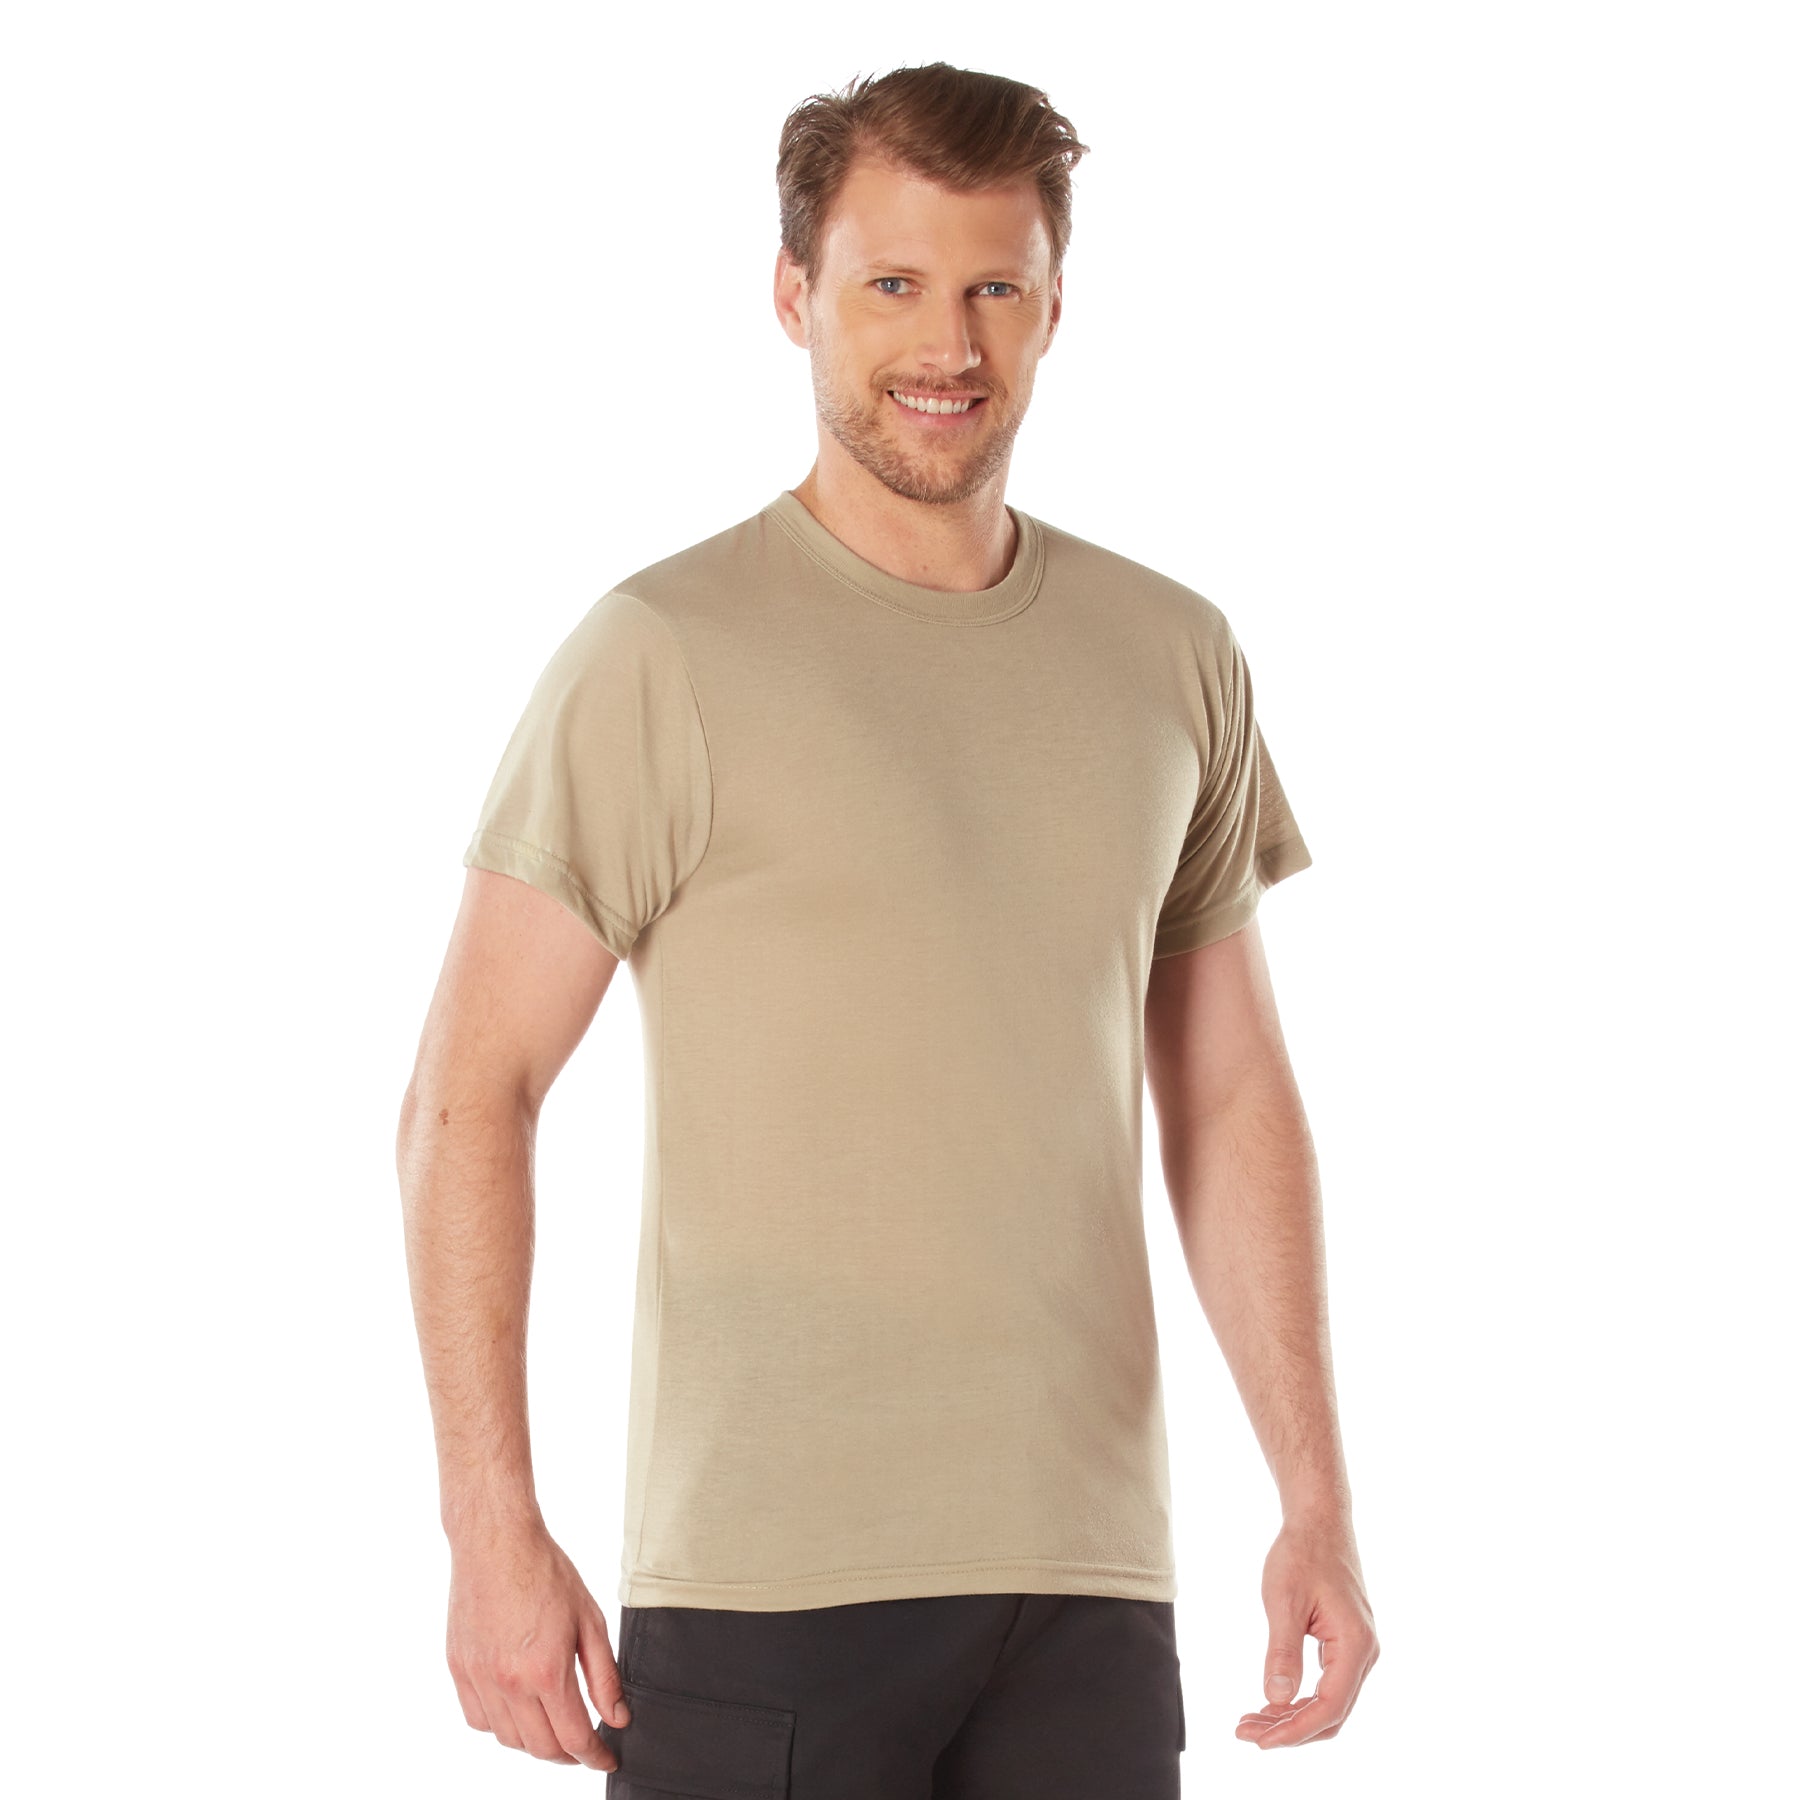 [AR 670-1][Military] Cotton T-Shirts